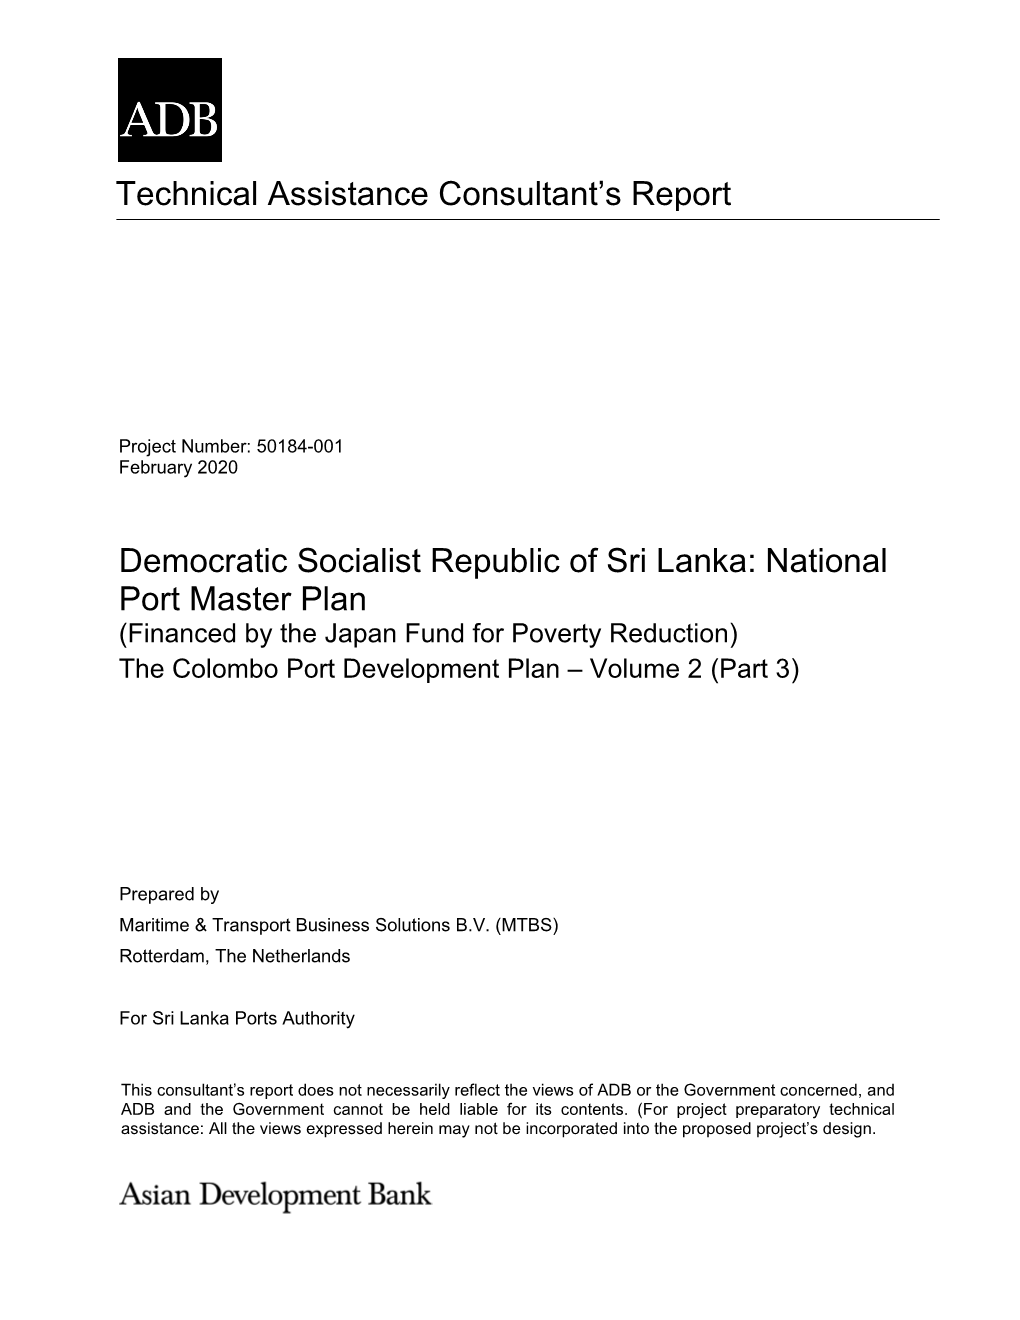 Technical Assistance Consultant's Report Democratic Socialist Republic of Sri Lanka: National Port Master Plan